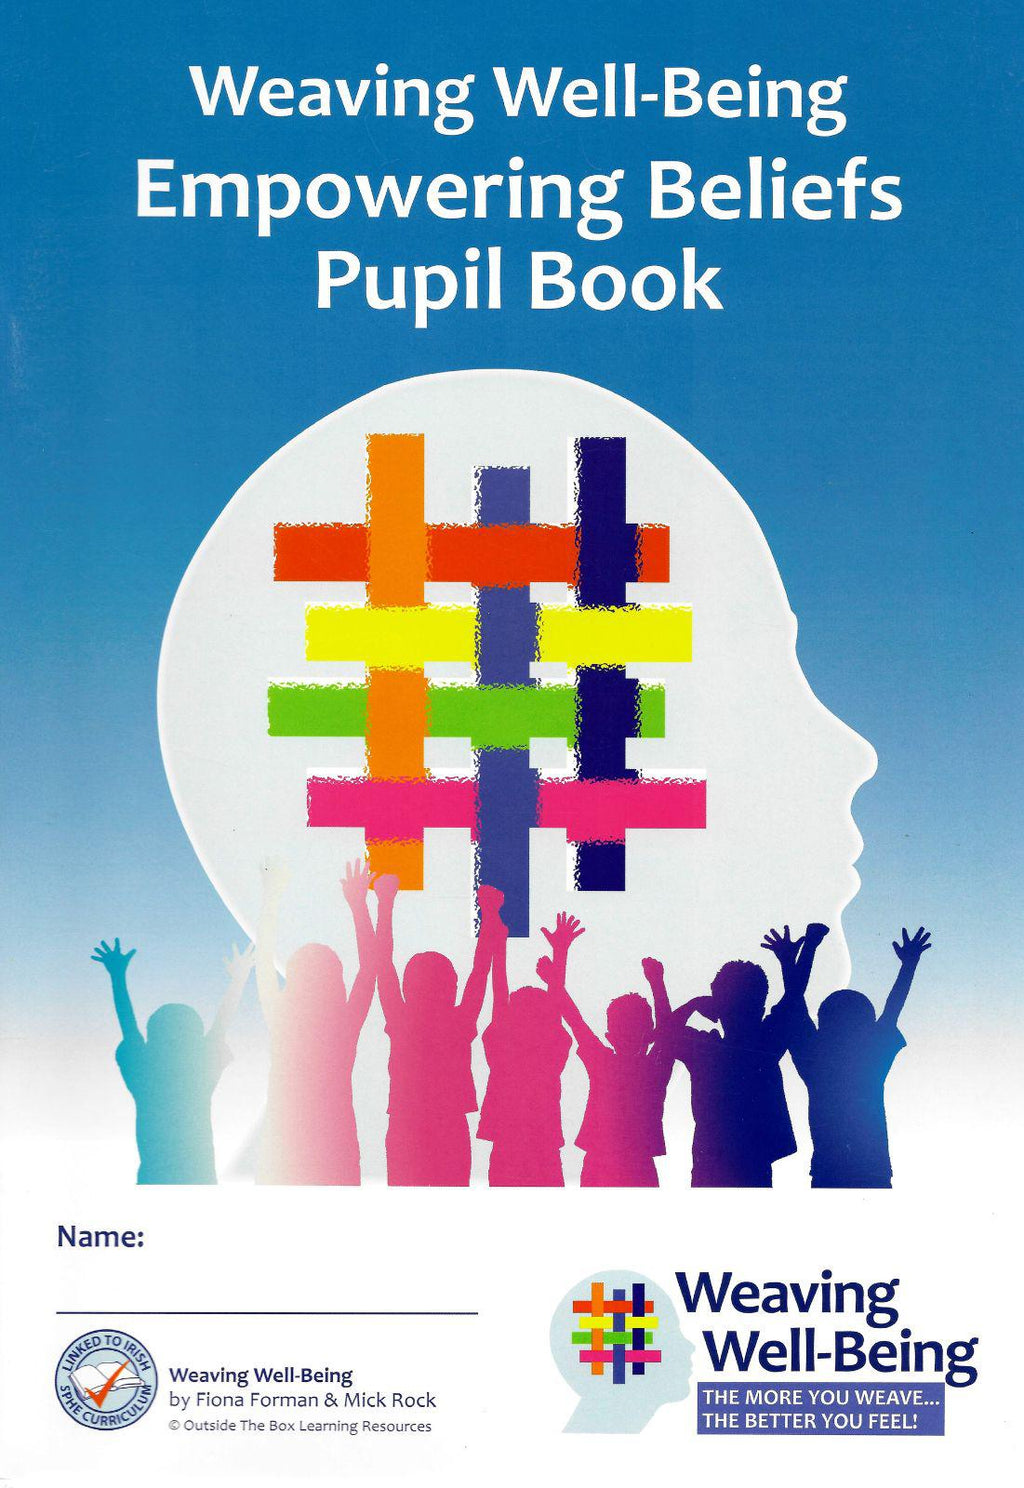 Empowering　Class　Weaving　Beliefs　Well-Being　6th　Pupil　Book